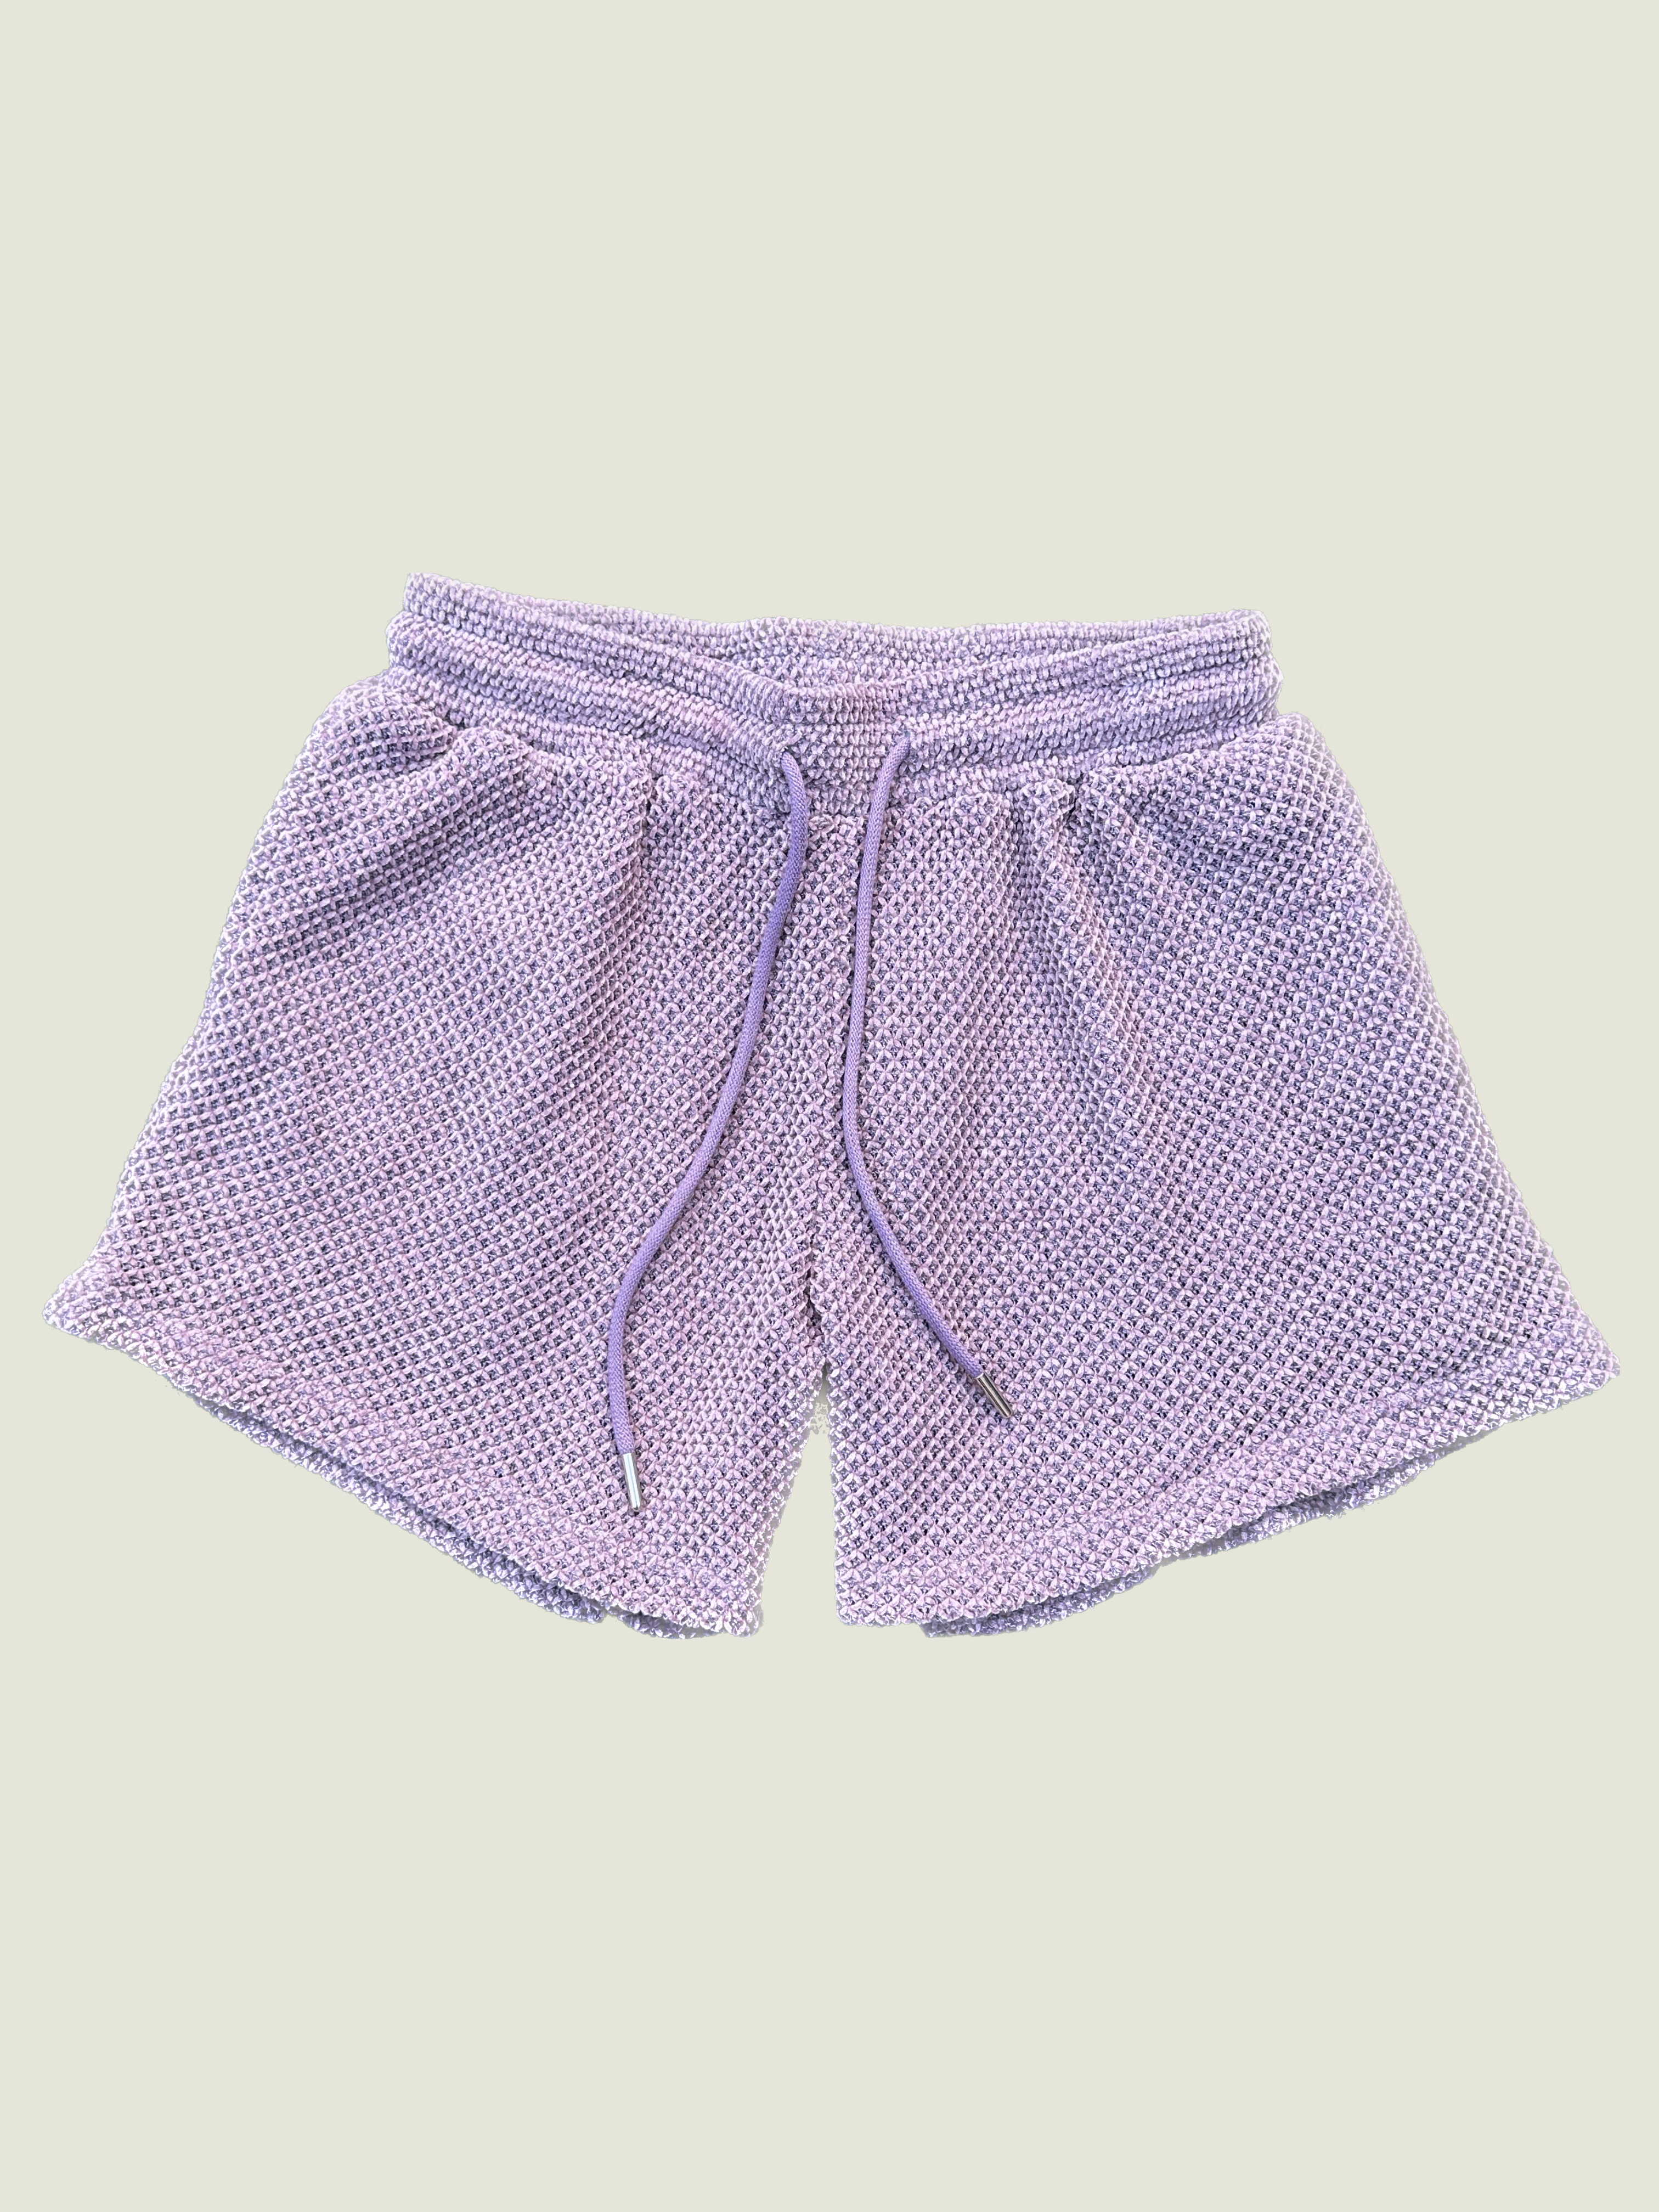 Loom Shorts - Purp